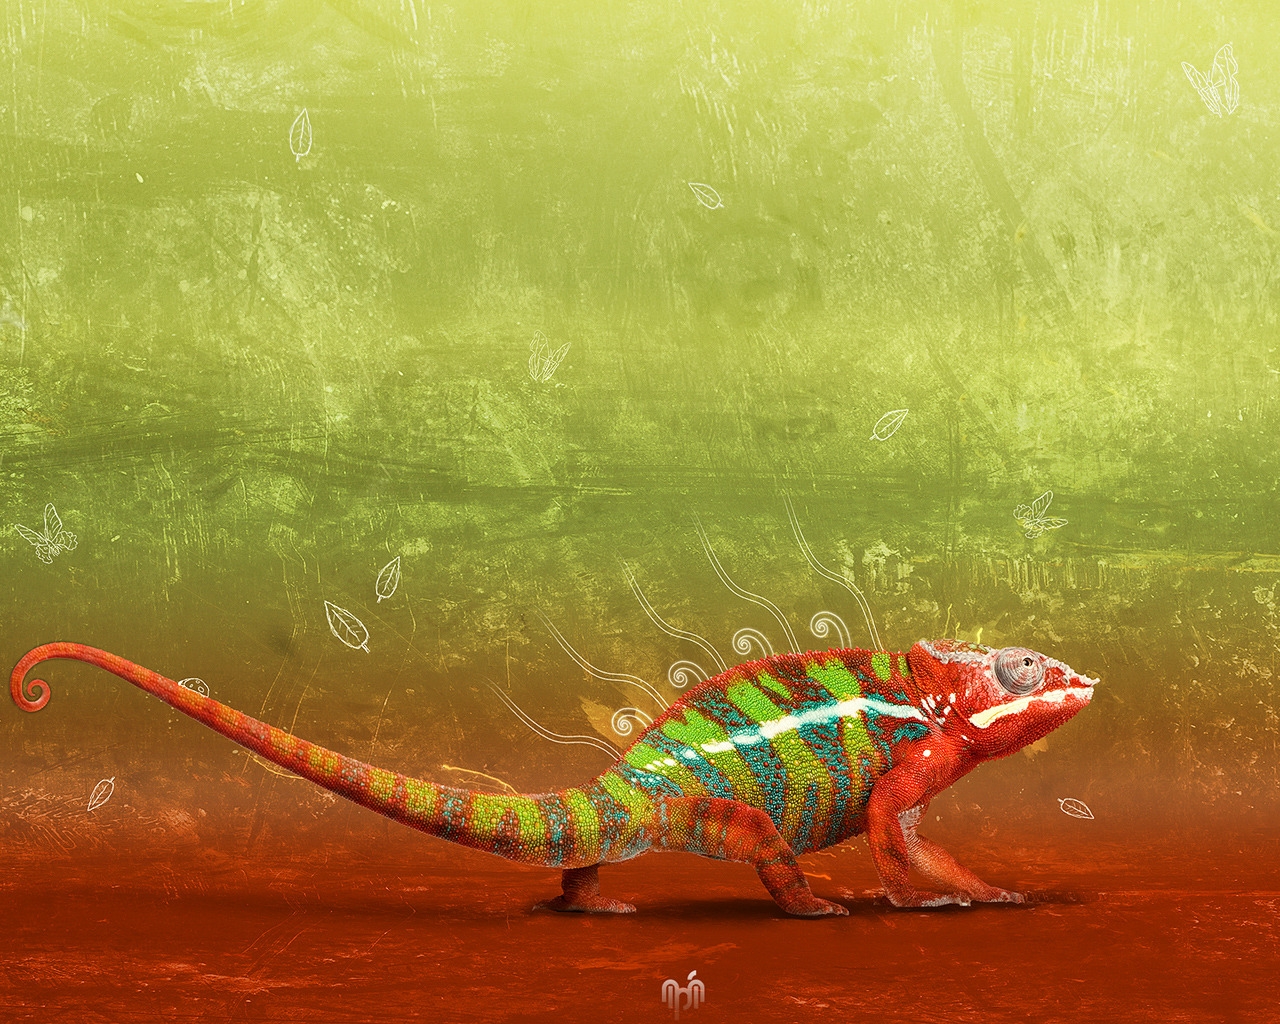 Great Chameleon for 1280 x 1024 resolution